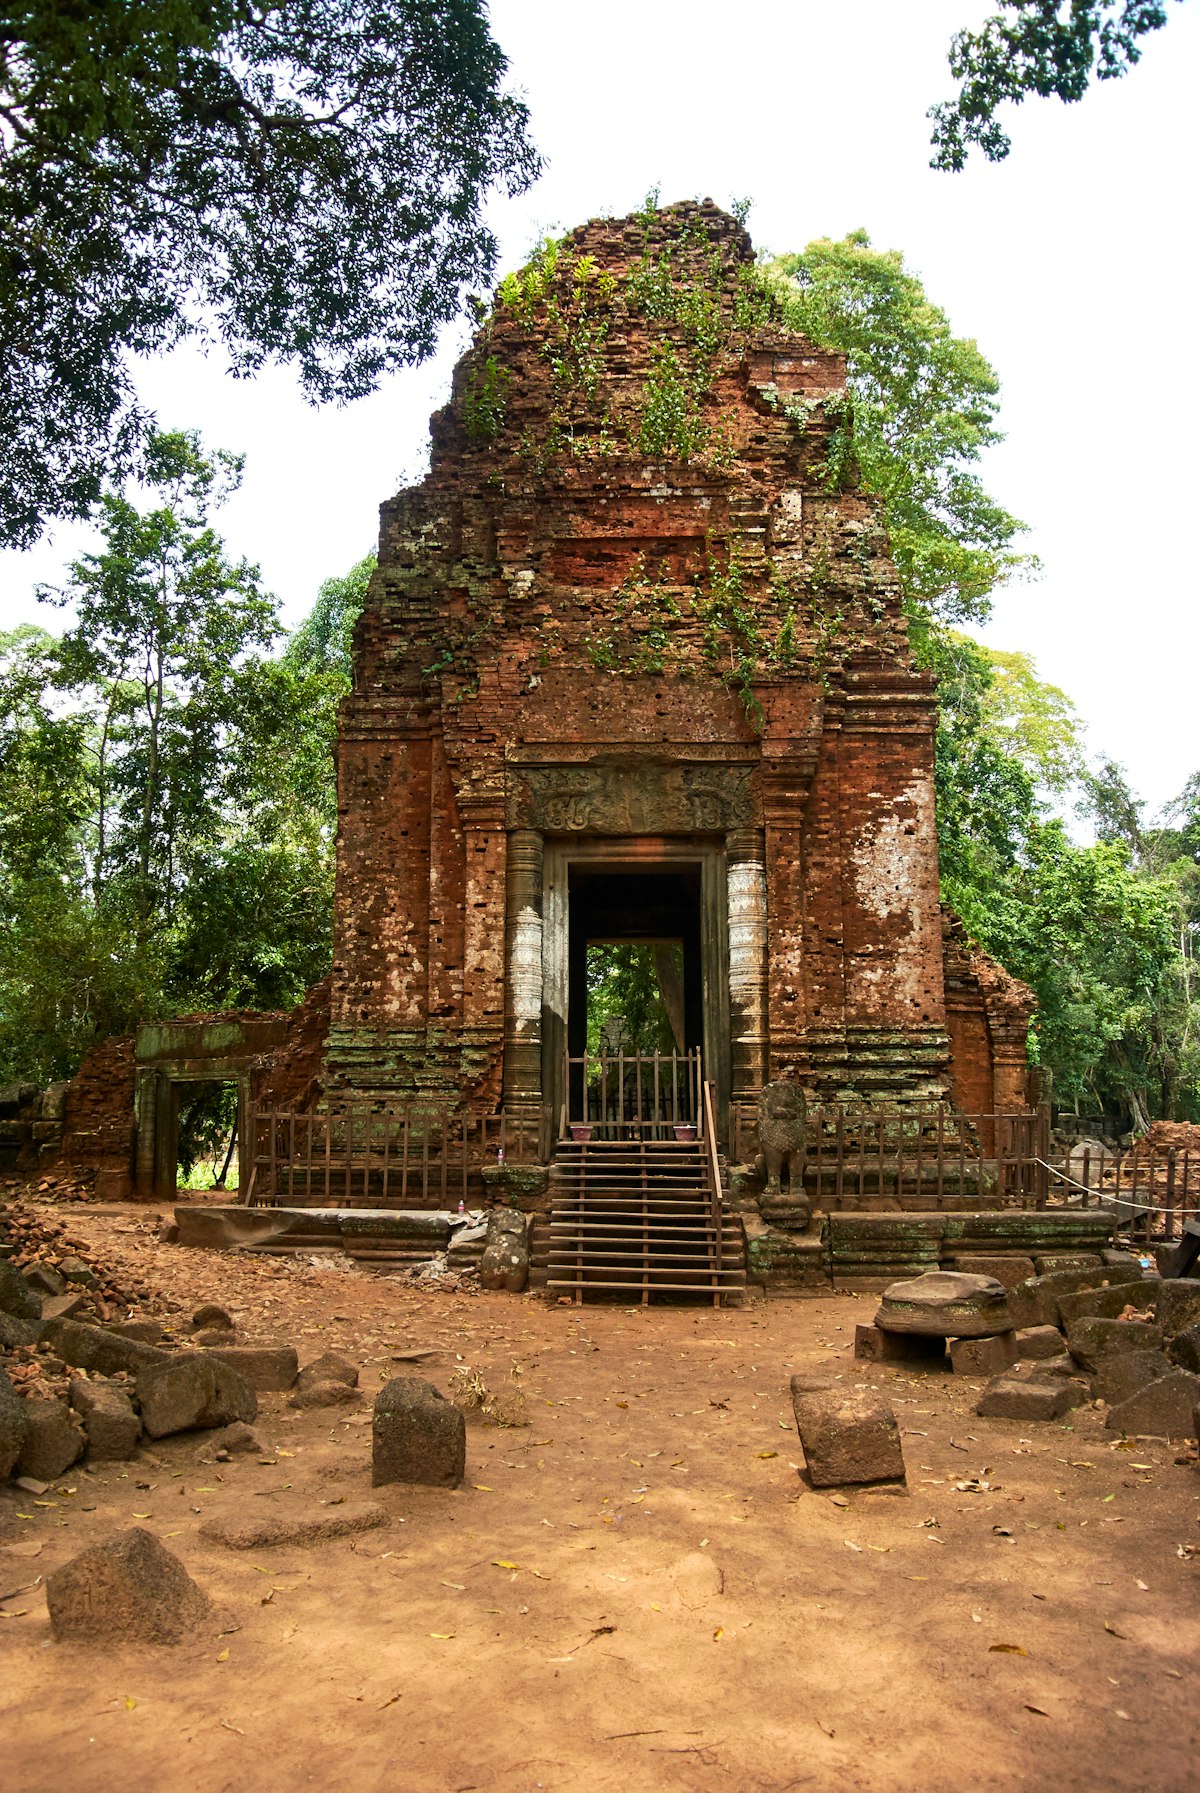 An overgrown ruin in Koh Ker.
1078808336
prasat, thom, ancient, angkor, angkor wat, architecture, art, asia, asian, buddha, buddhism, buddhist, building, cambodia, cambodian, culture, dawn, face, heritage, hindu, hinduism, historical, india, khmer, lake, landmark, laos, meditation, nature, old, pagoda, prayer, reap, religion, religious, ruin, shiva, siam, siem, siem reap, statue, stone, sunrise, sunset, temple, tower, travel, unesco, wat